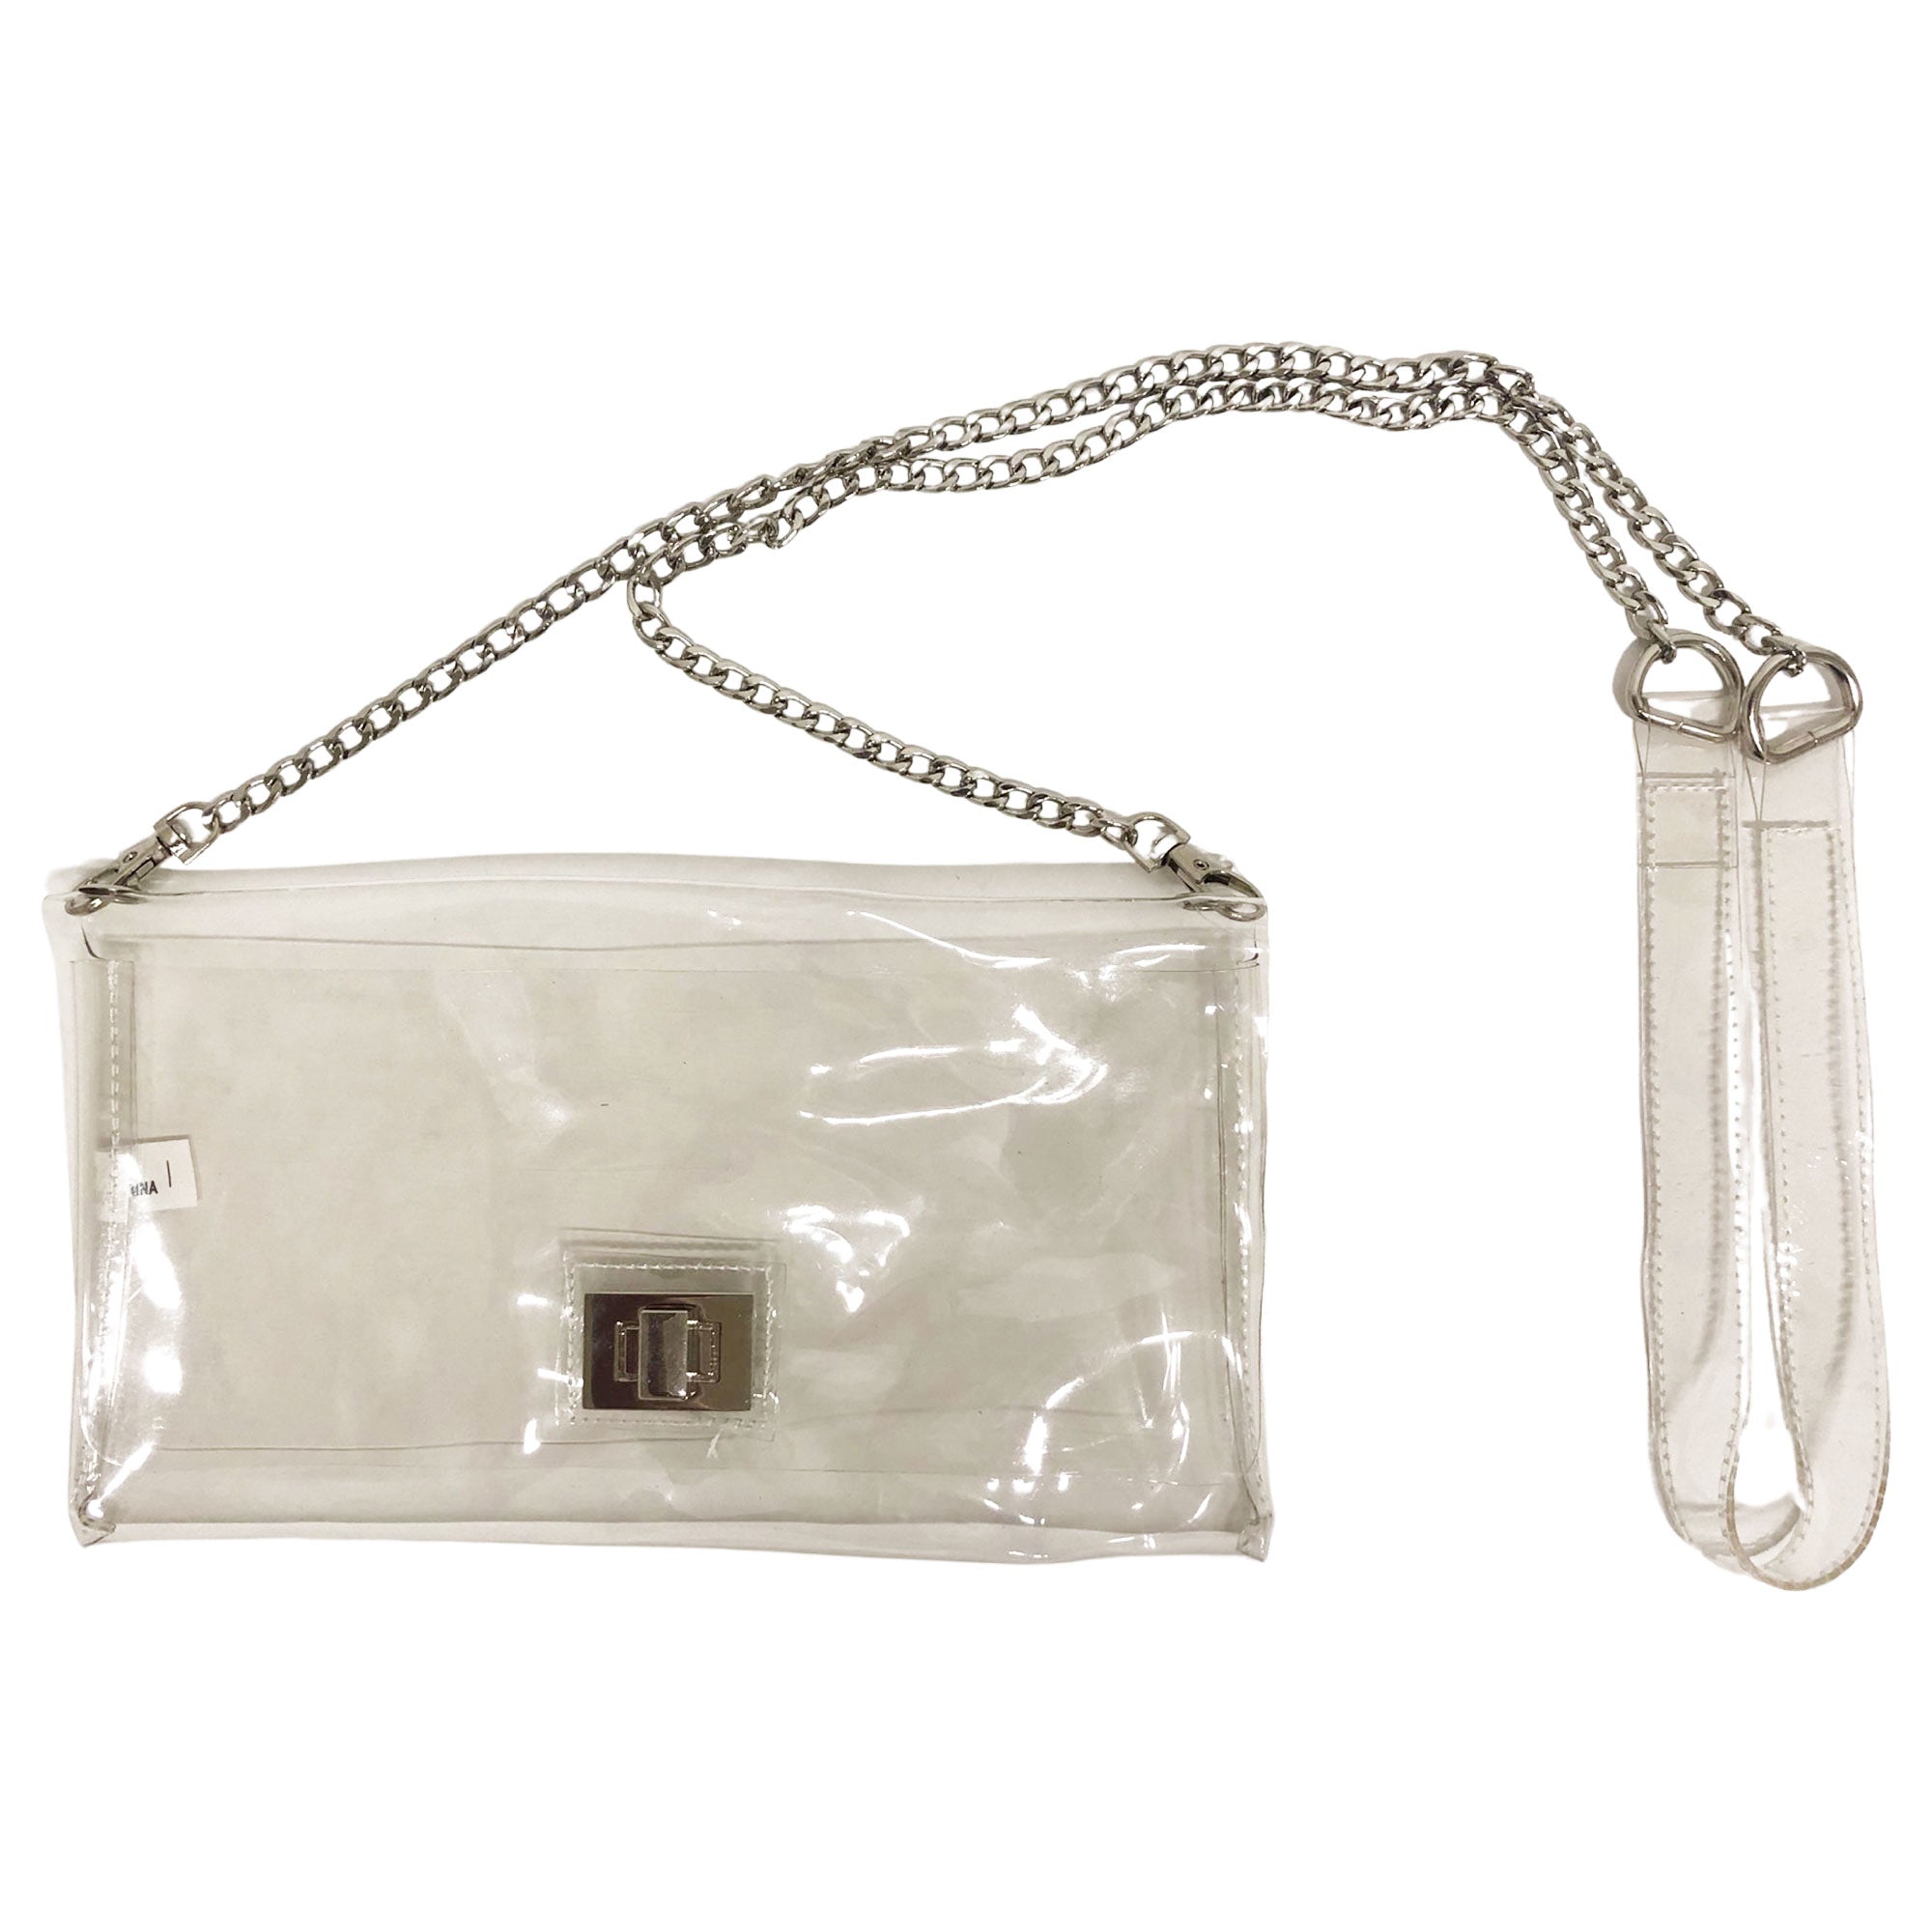 CLEARANCE WHOLESALE CLEAR HANDBAG (CASE OF 24 - $2.50 / PIECE)  Wholesale Transparent Handbag SKU: C3021-24